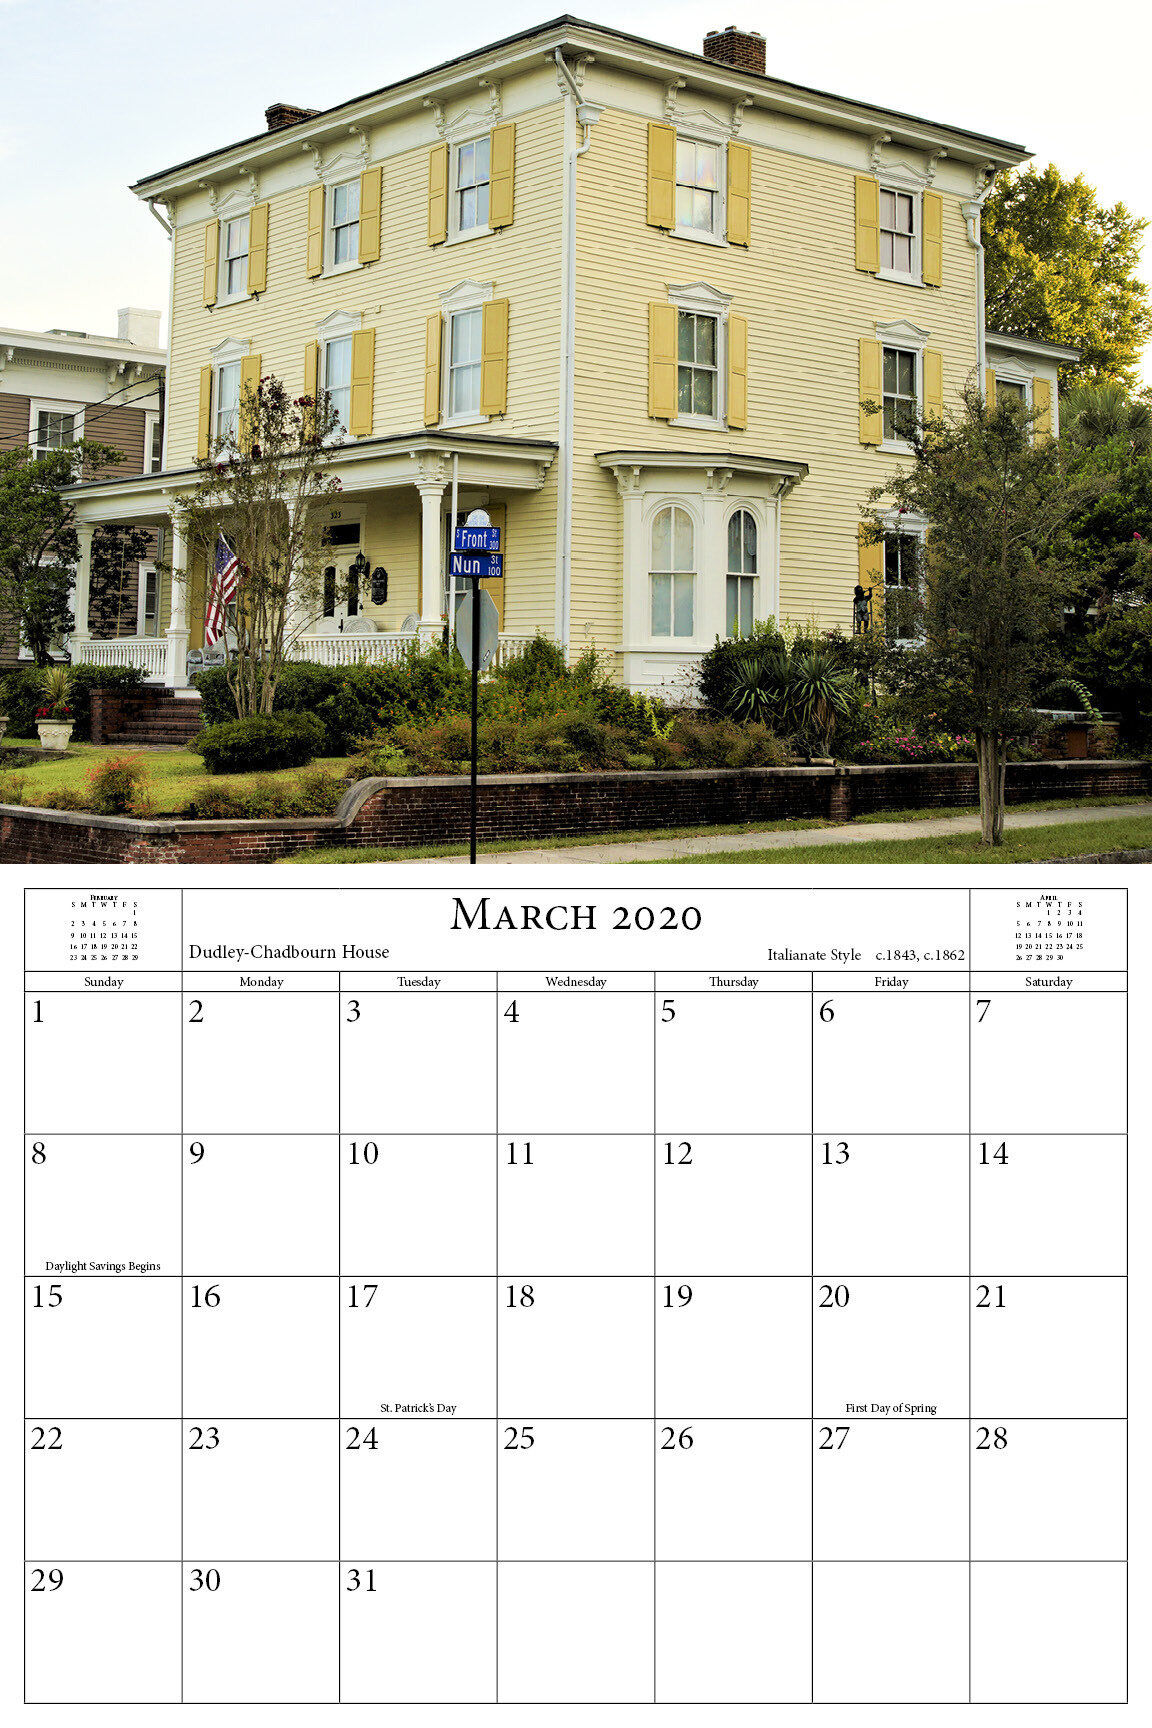 Wilmington Calendar 2019 Desgin by Cybergraph Photos by Michael Smith16.jpg